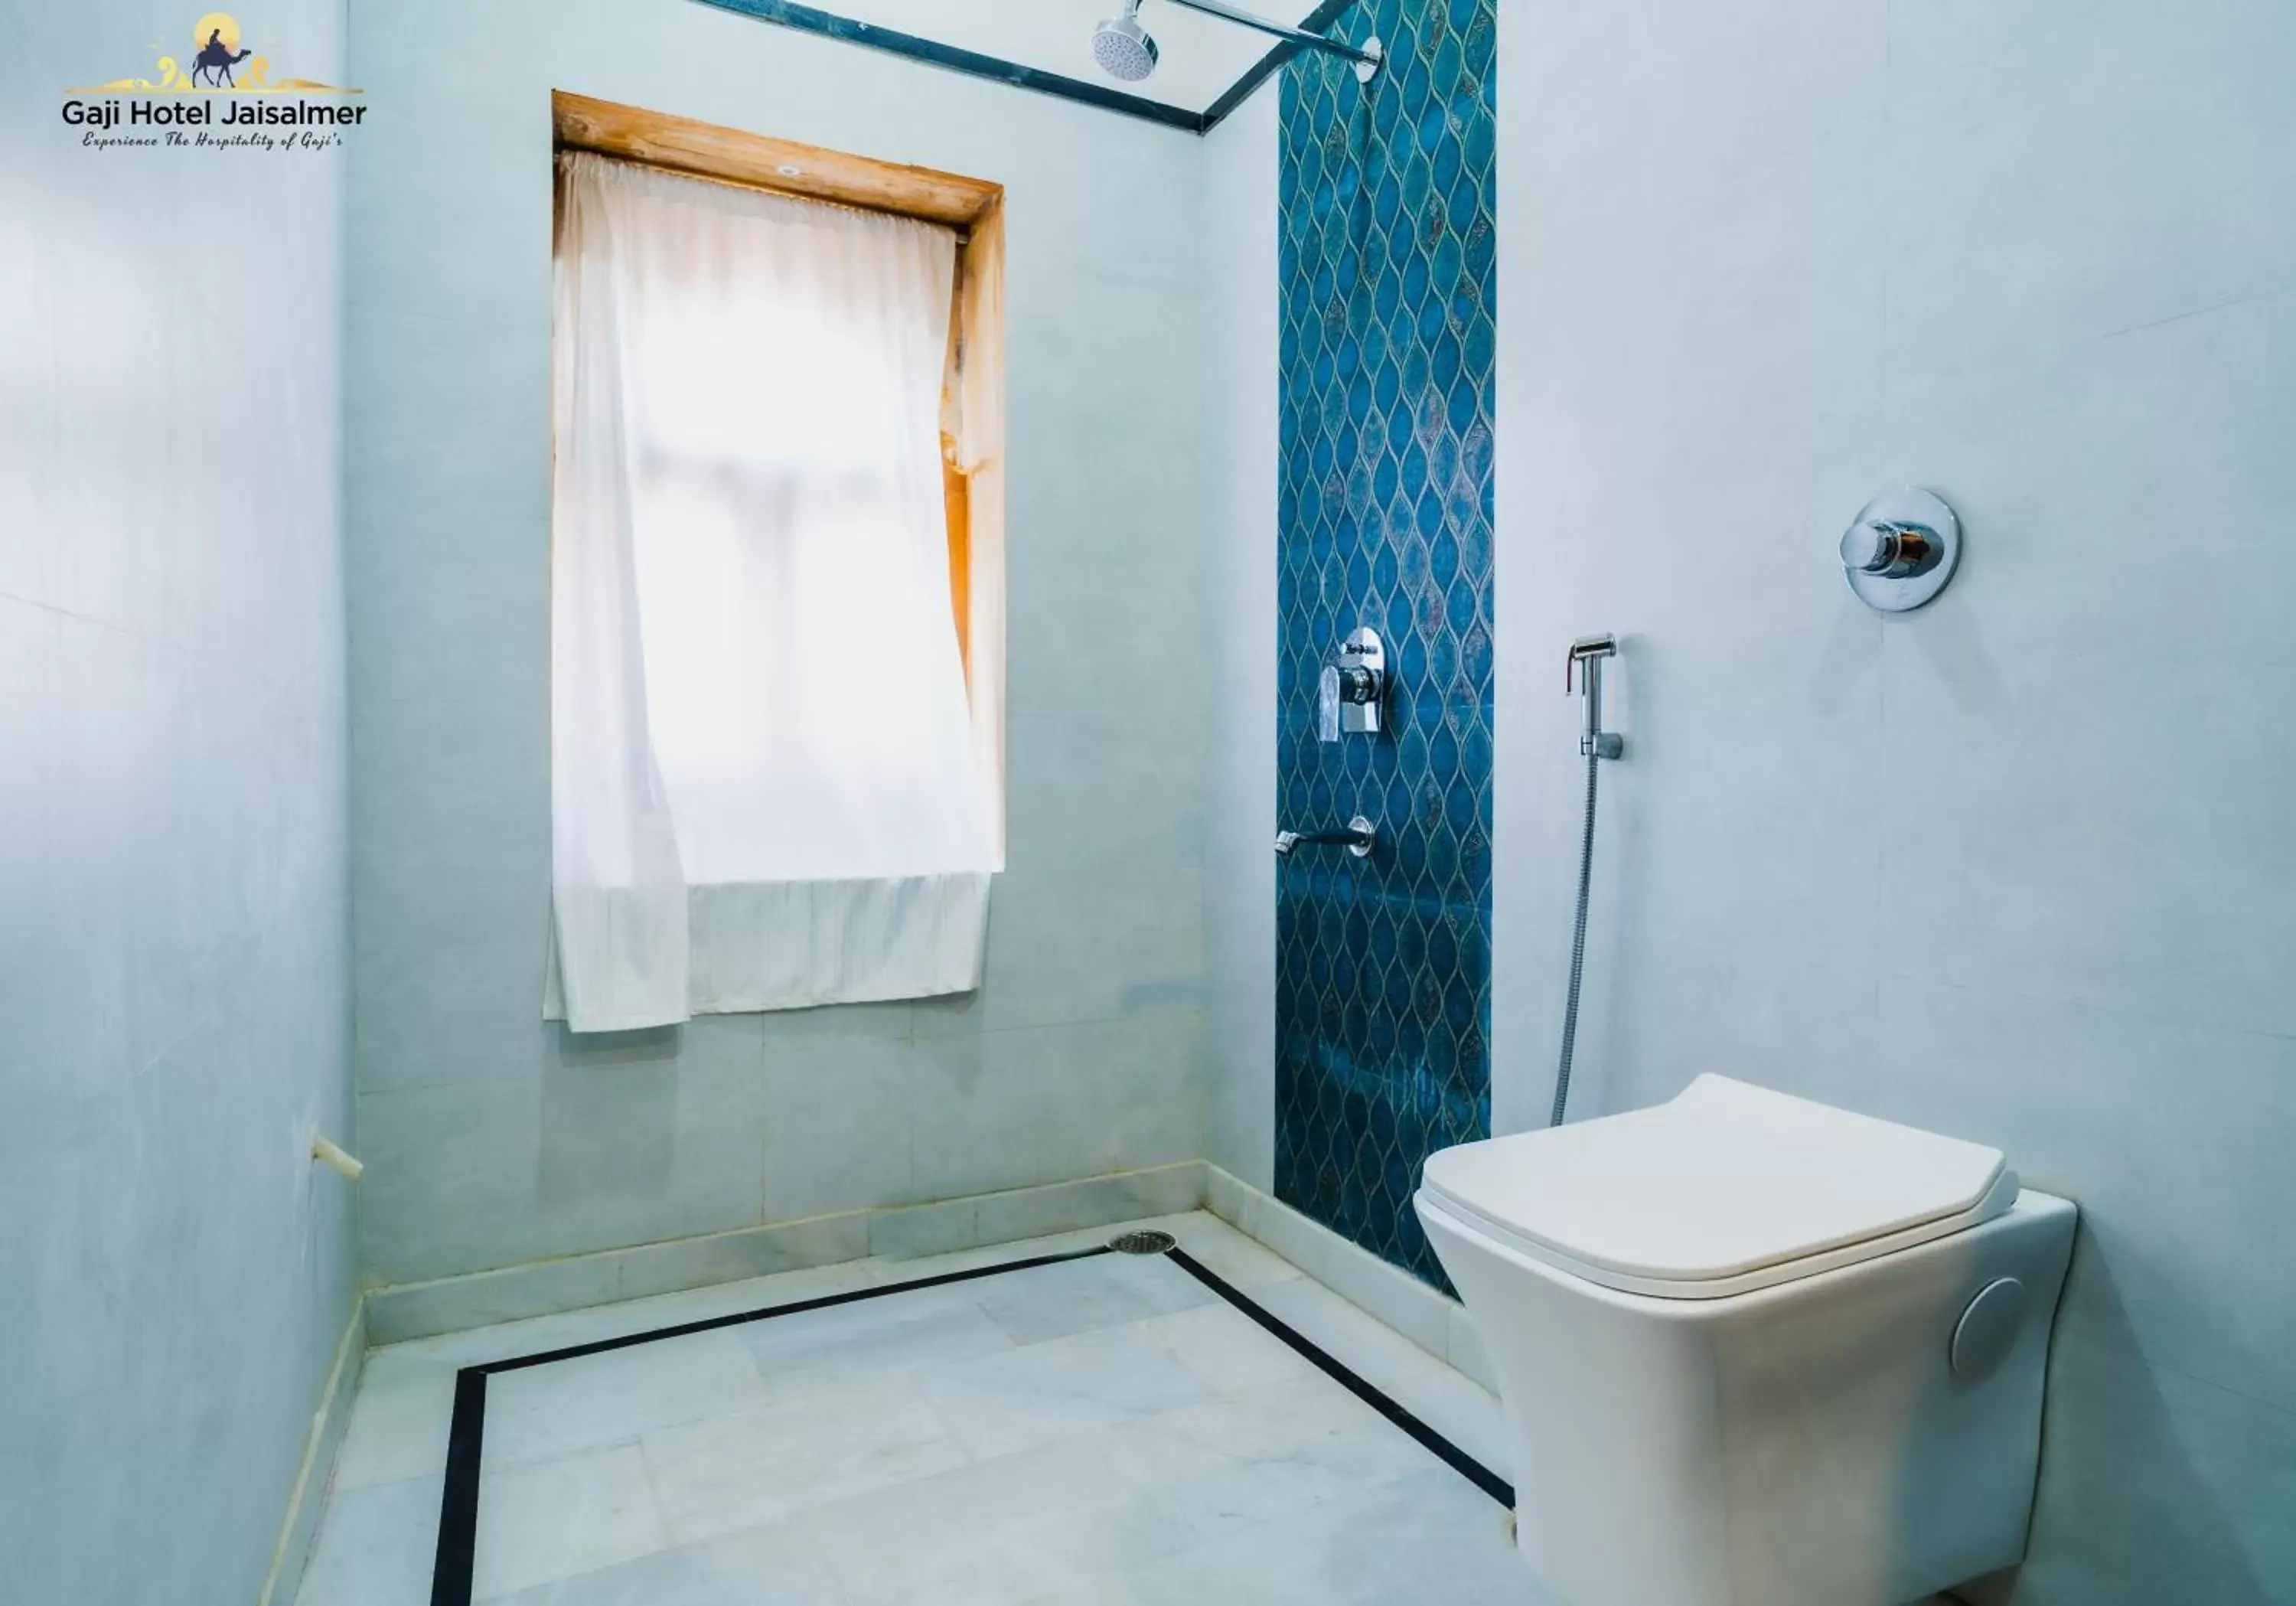 Bathroom in Gaji Hotel Jaisalmer